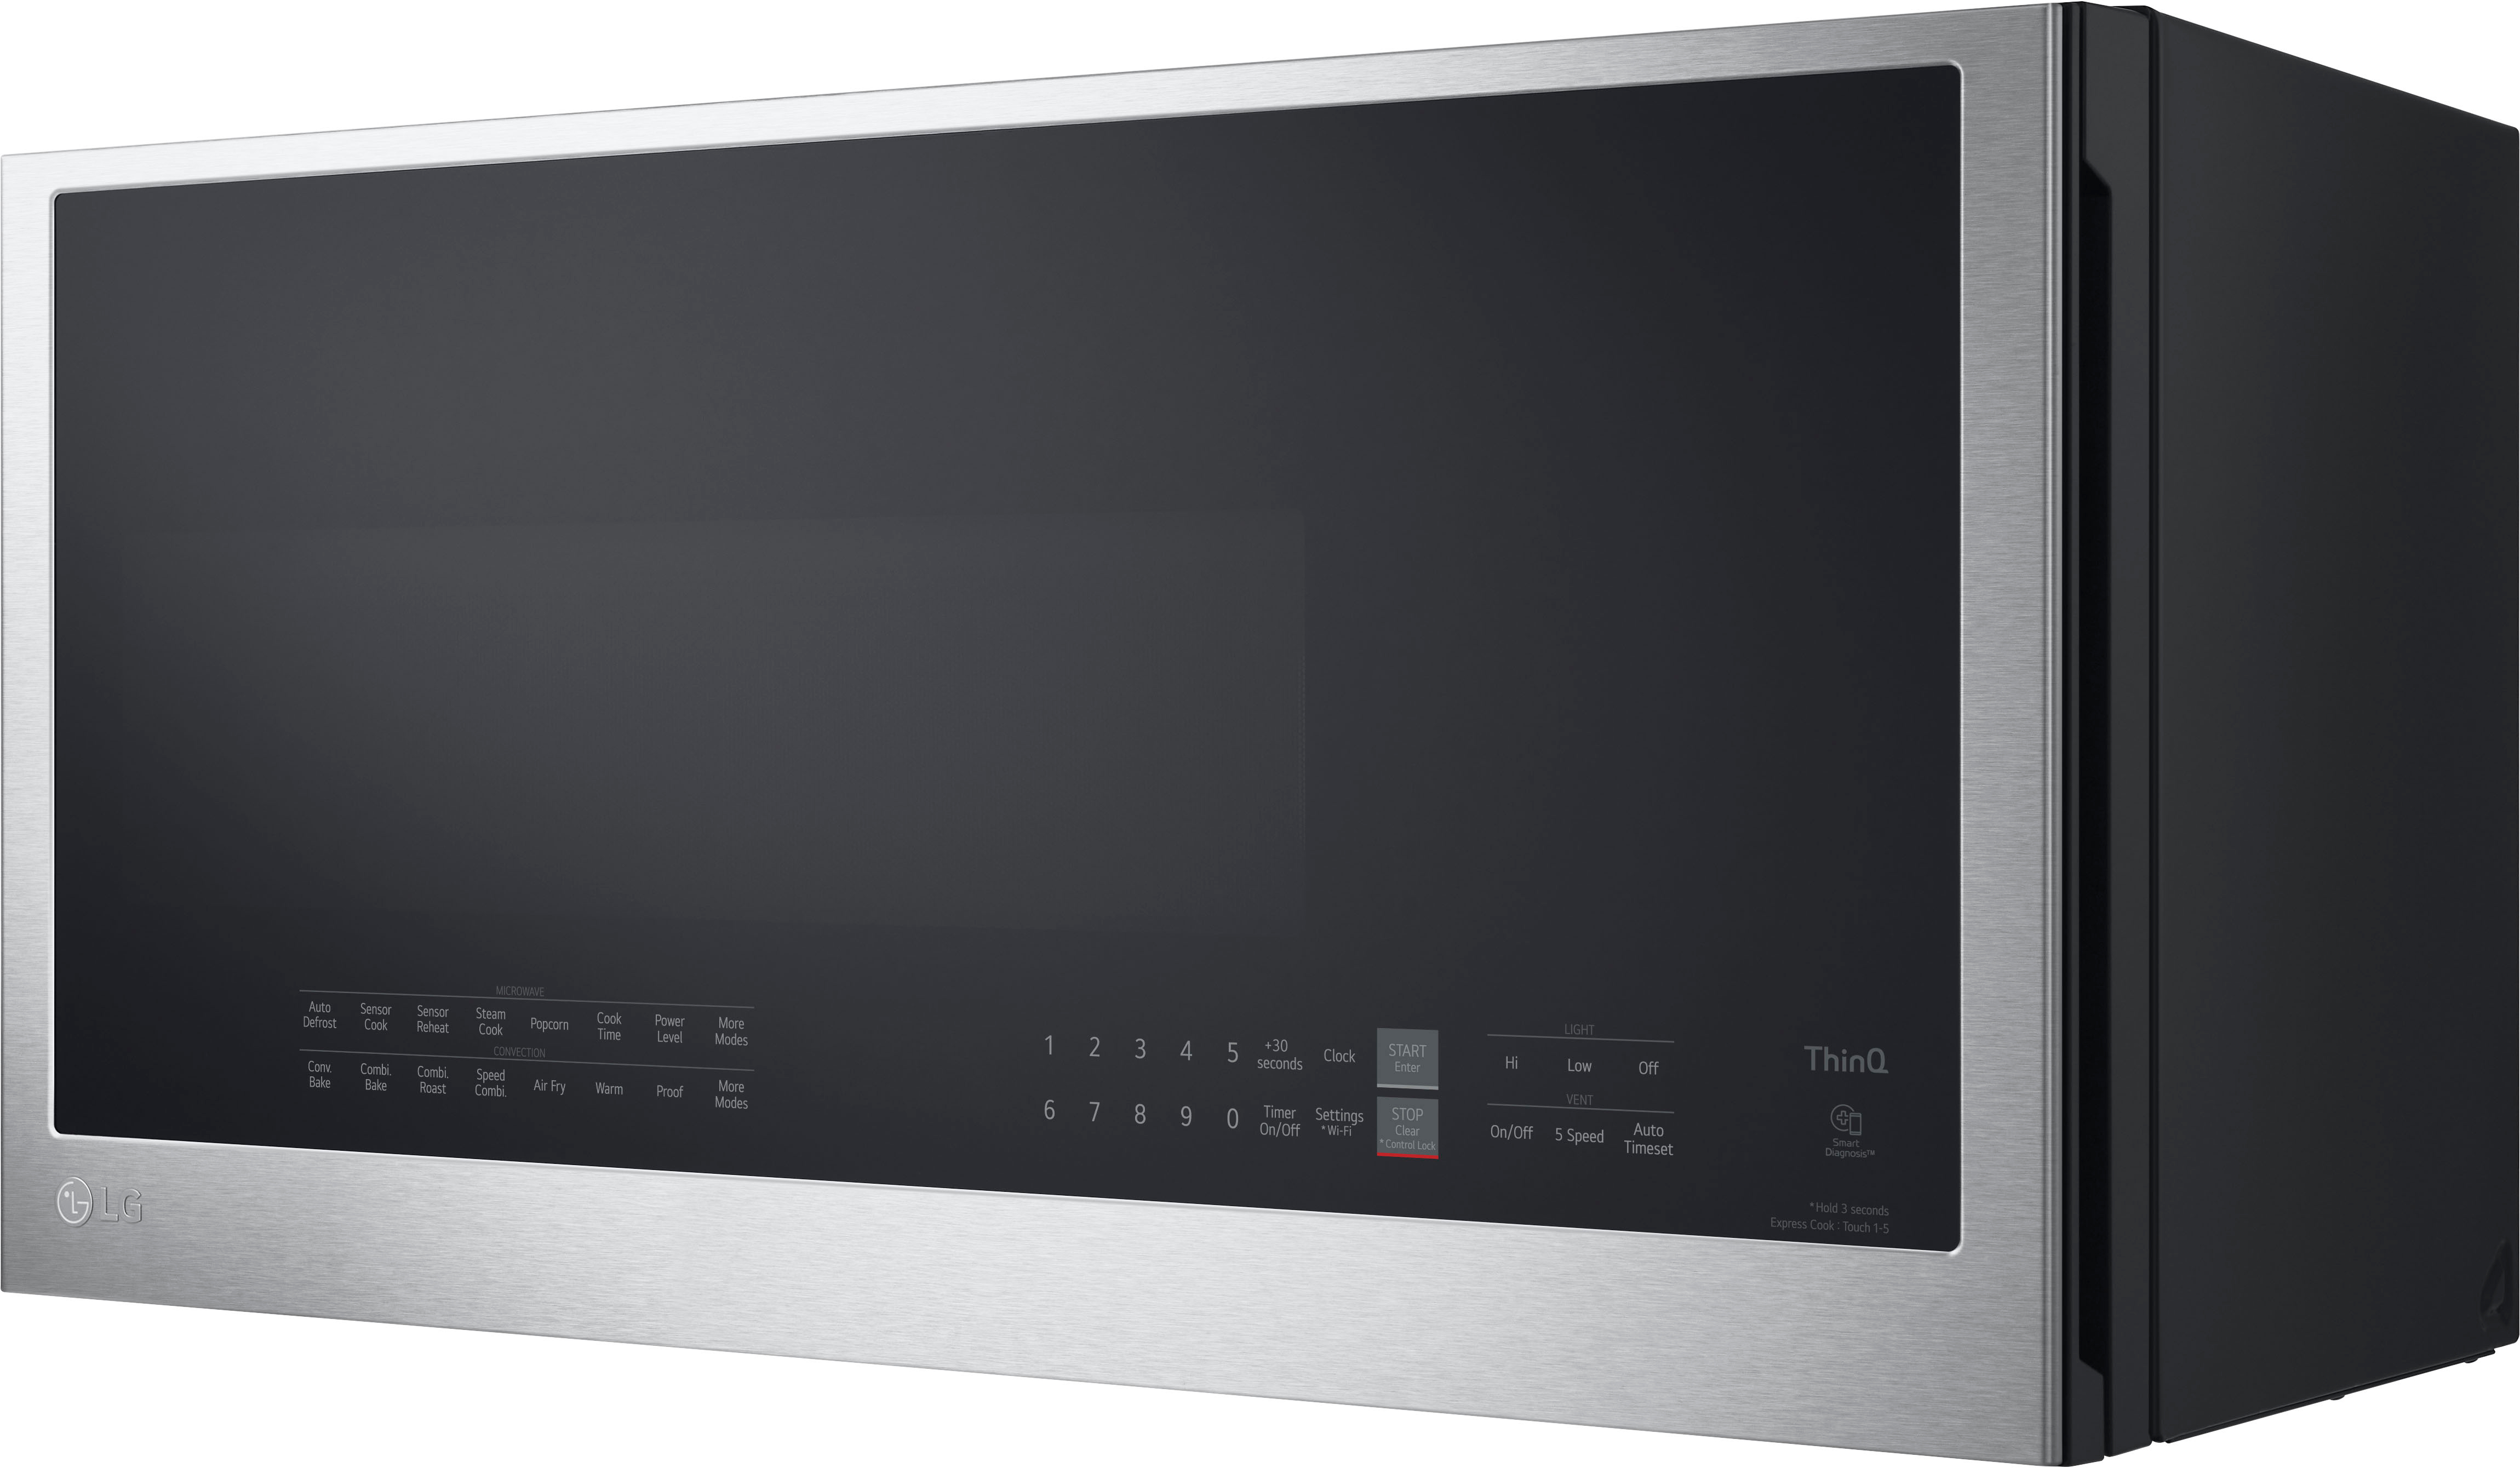 GE 1-cu ft 1050-Watt Air Fry Sensor Cooking Controls Countertop